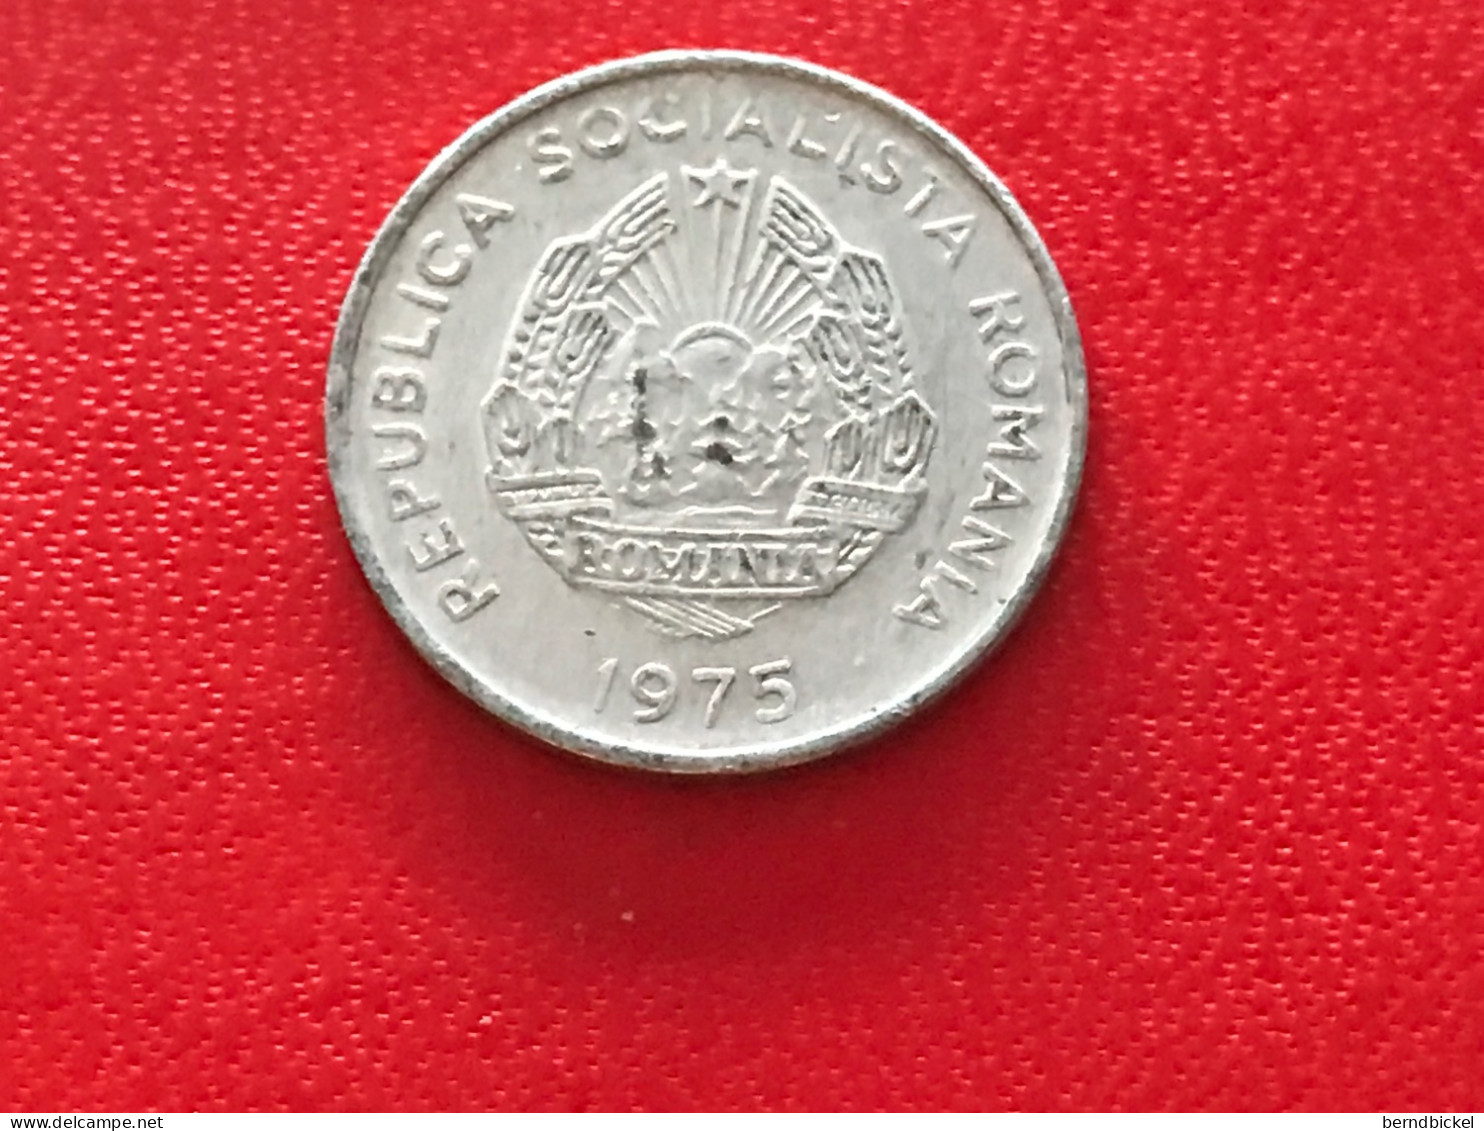 Münze Münzen Umlaufmünze Rumänien 15 Bani 1975 - Rumänien